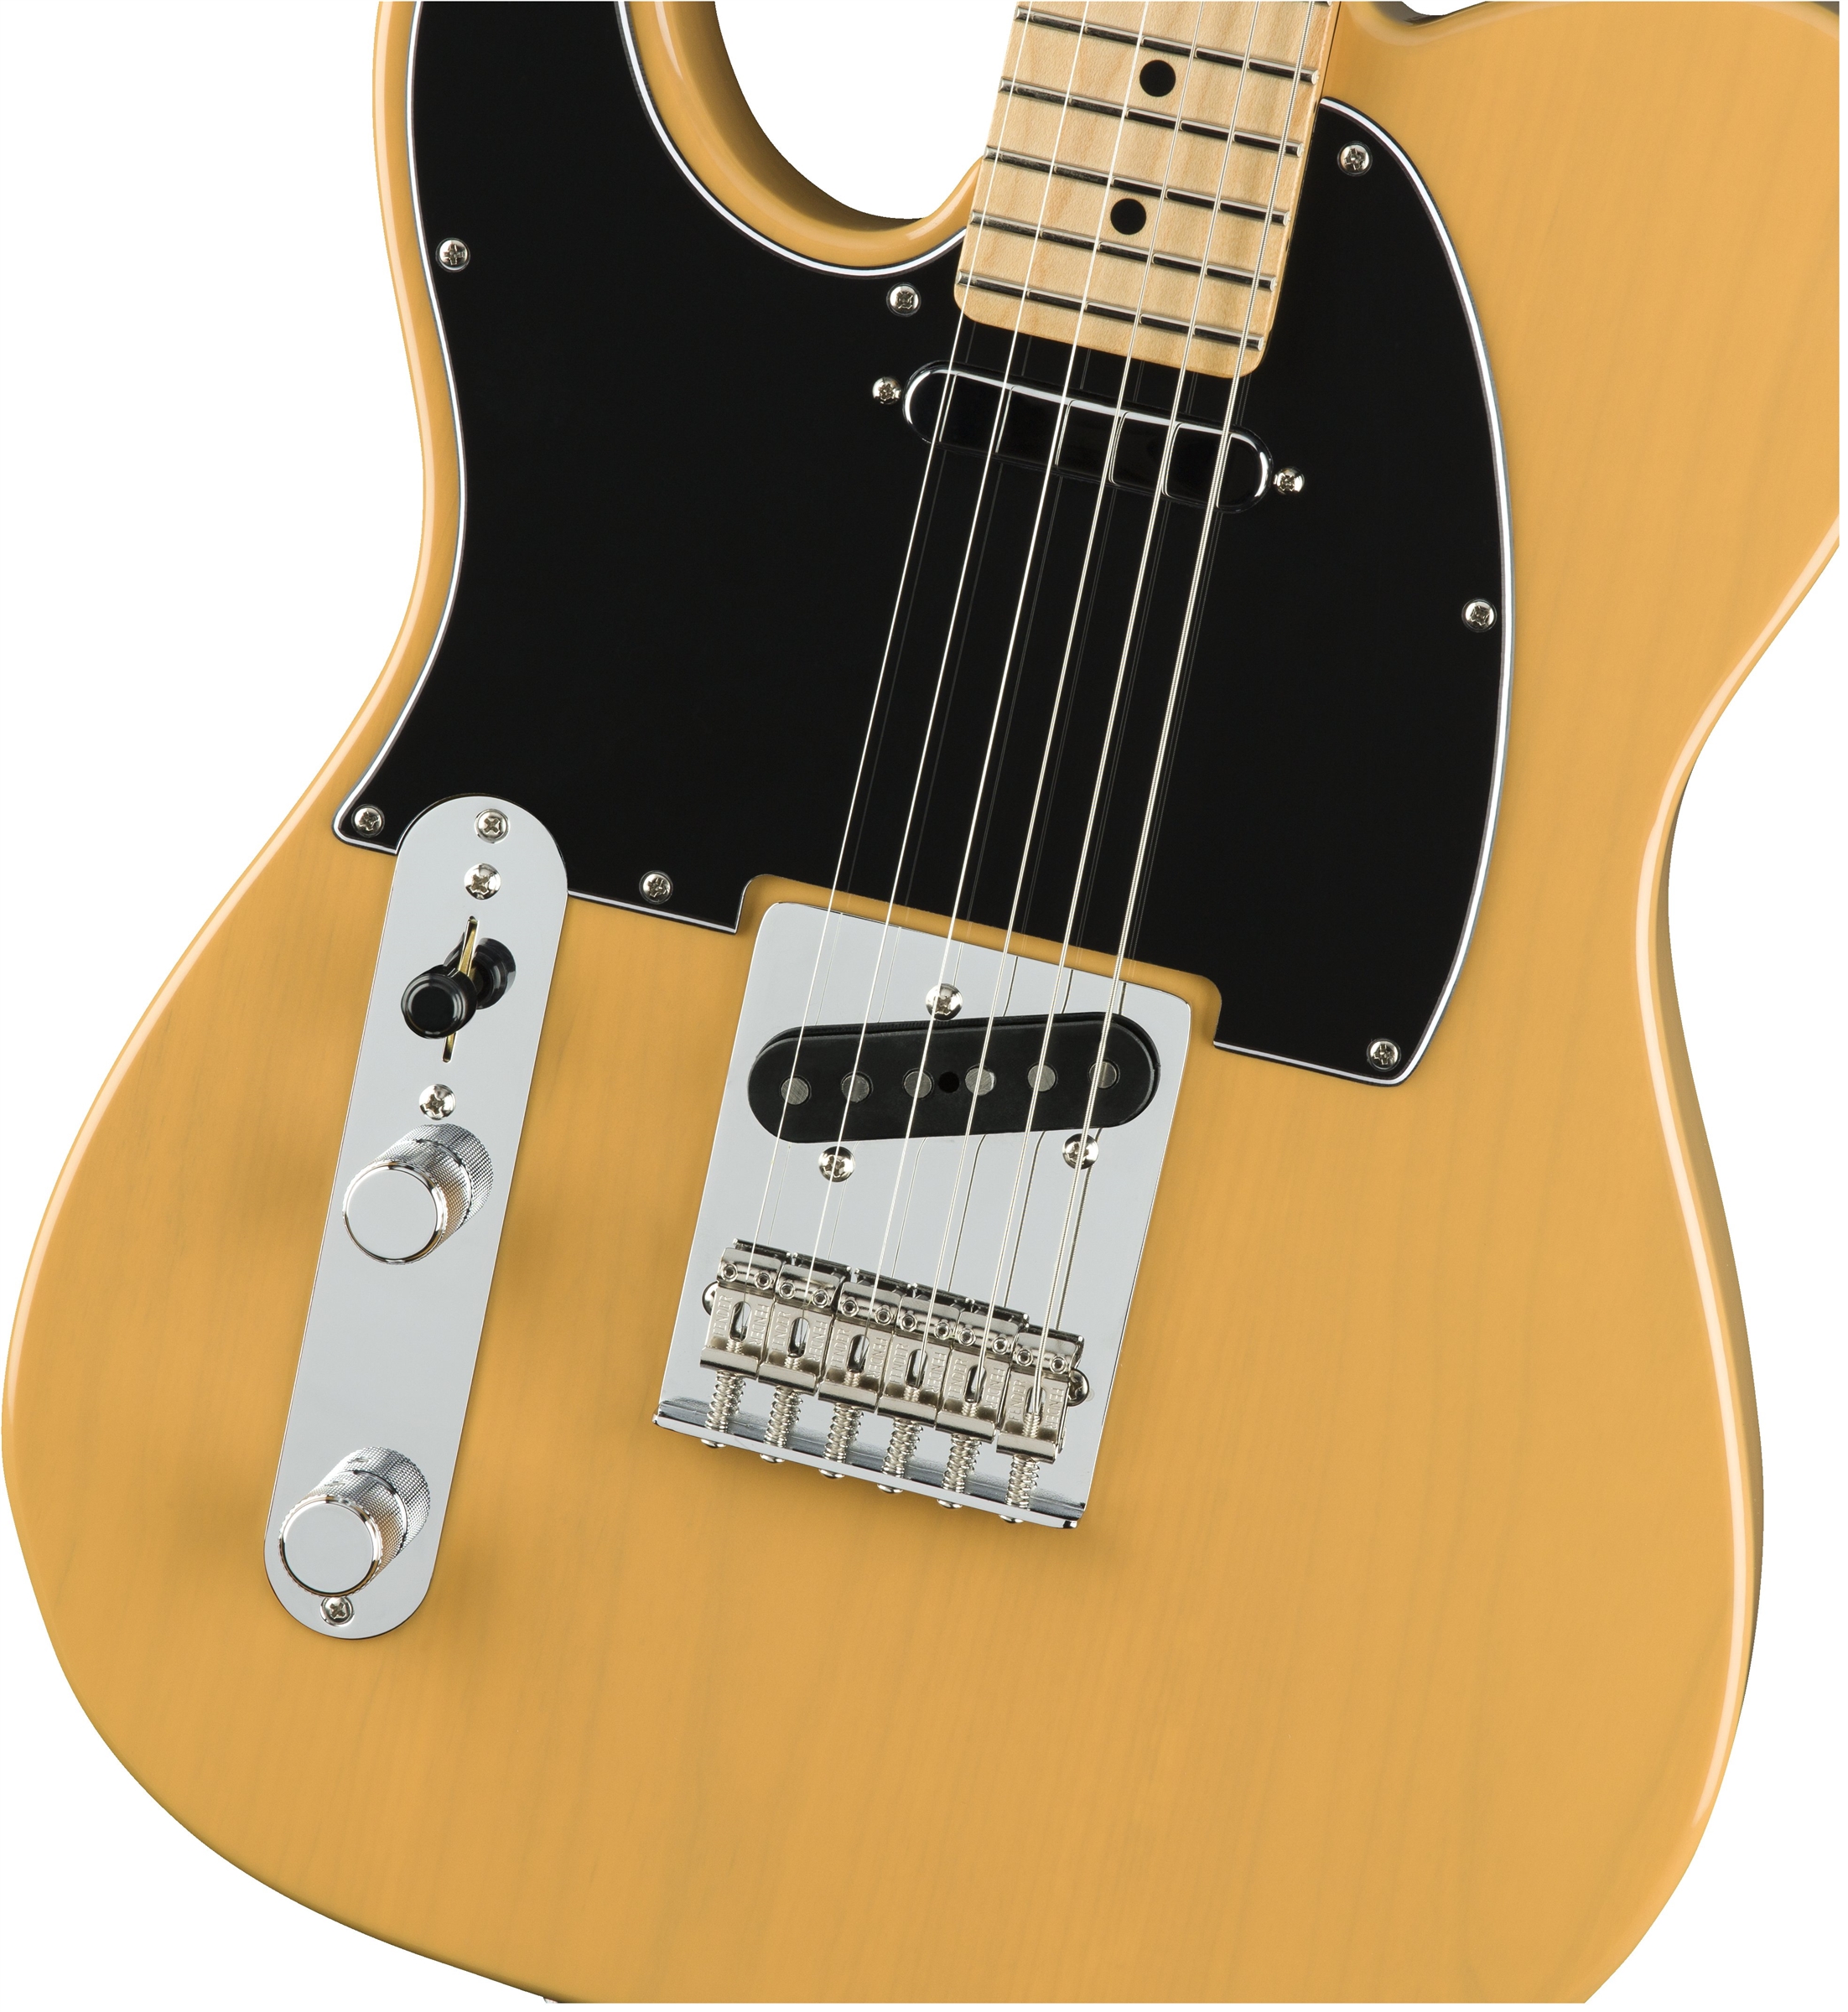 Fender Tele Player Lh Gaucher Mex 2s Mn - Butterscotch Blonde - Left-handed electric guitar - Variation 2